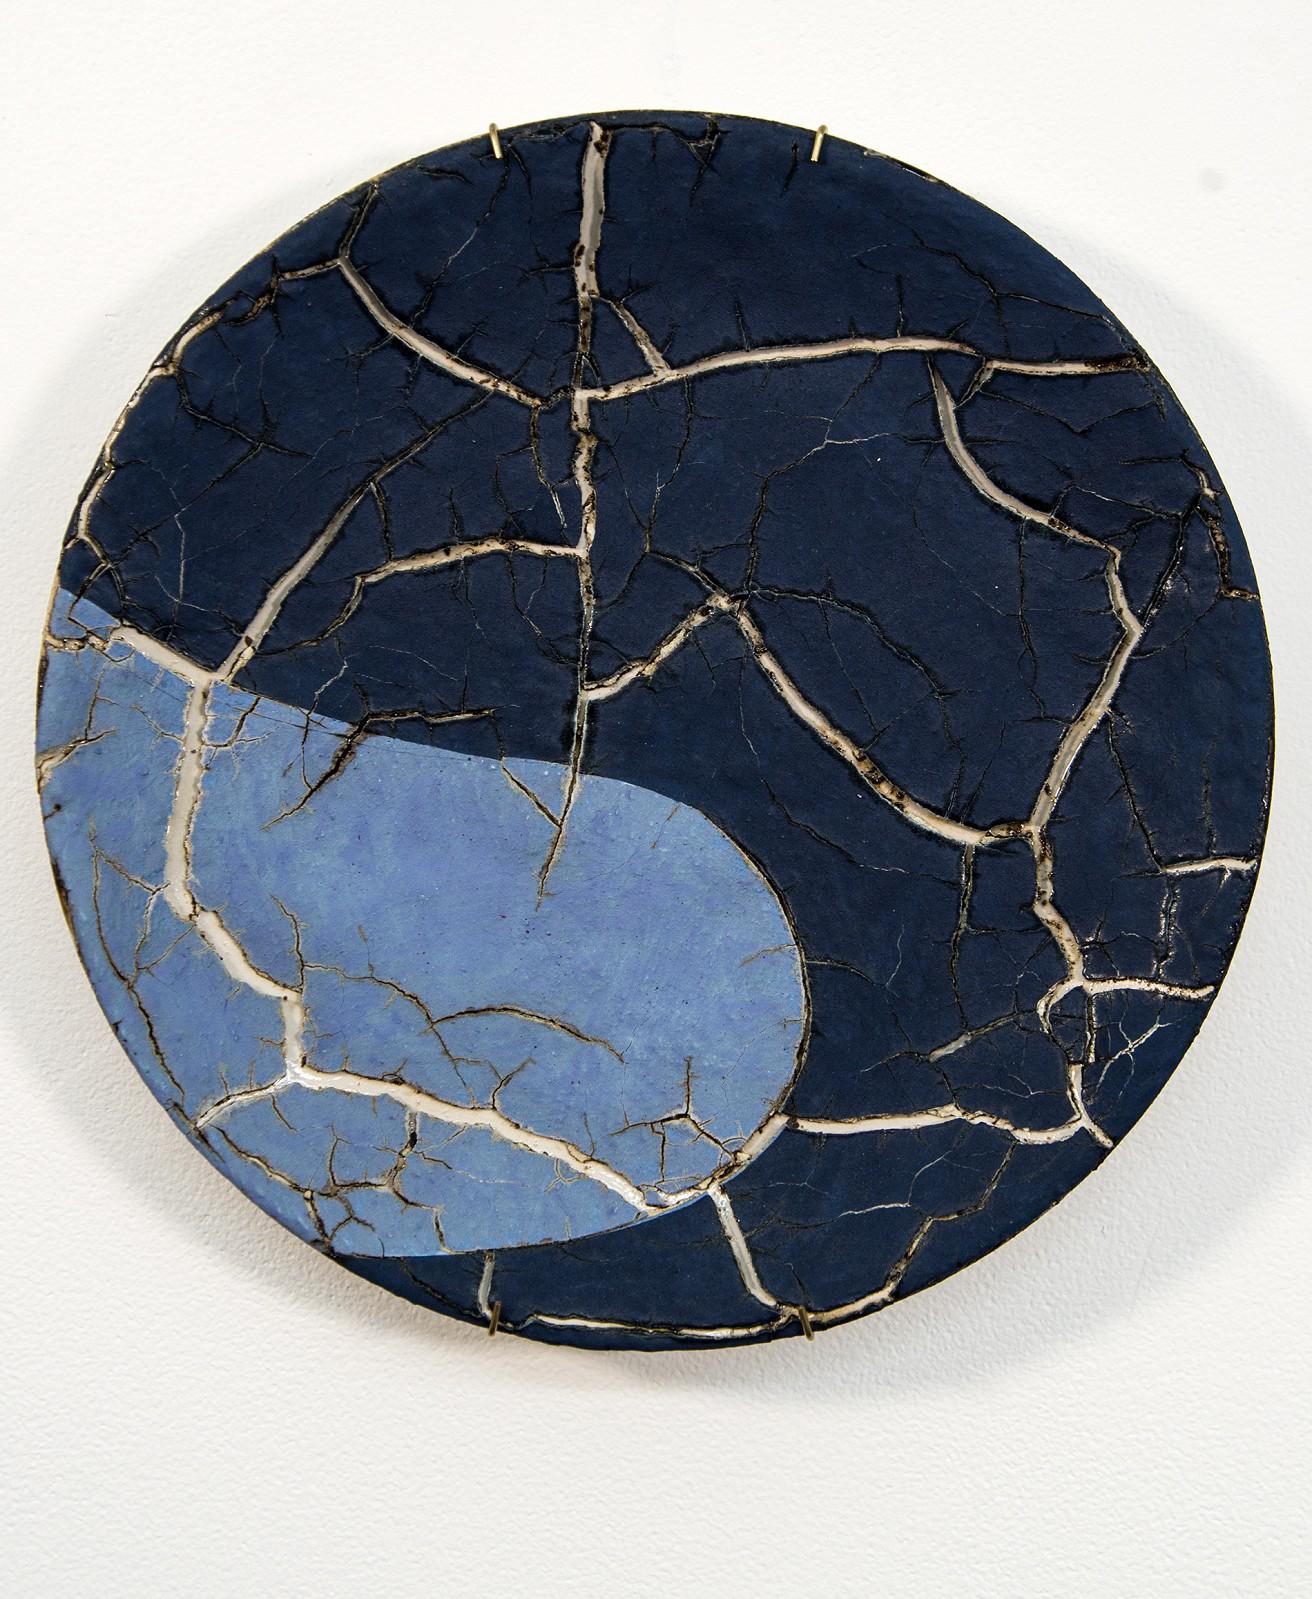 TP No 1 - blue, textured, pair, ceramic, wall mounted circular sculpture - Contemporary Sculpture by Steven Heinemann